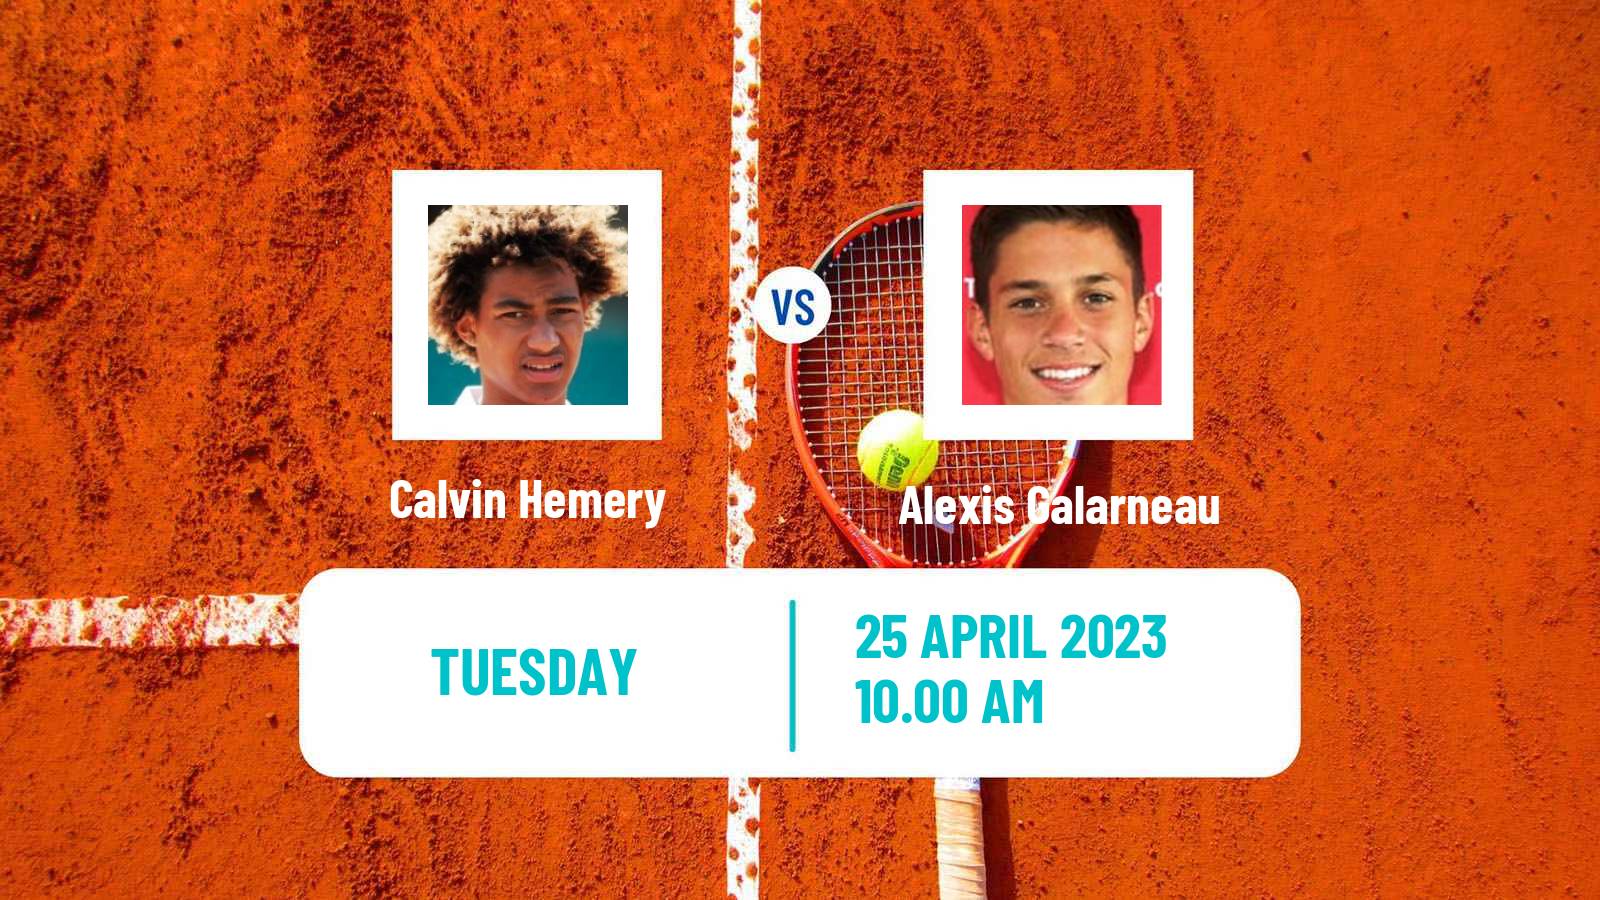 Tennis ATP Challenger Calvin Hemery - Alexis Galarneau